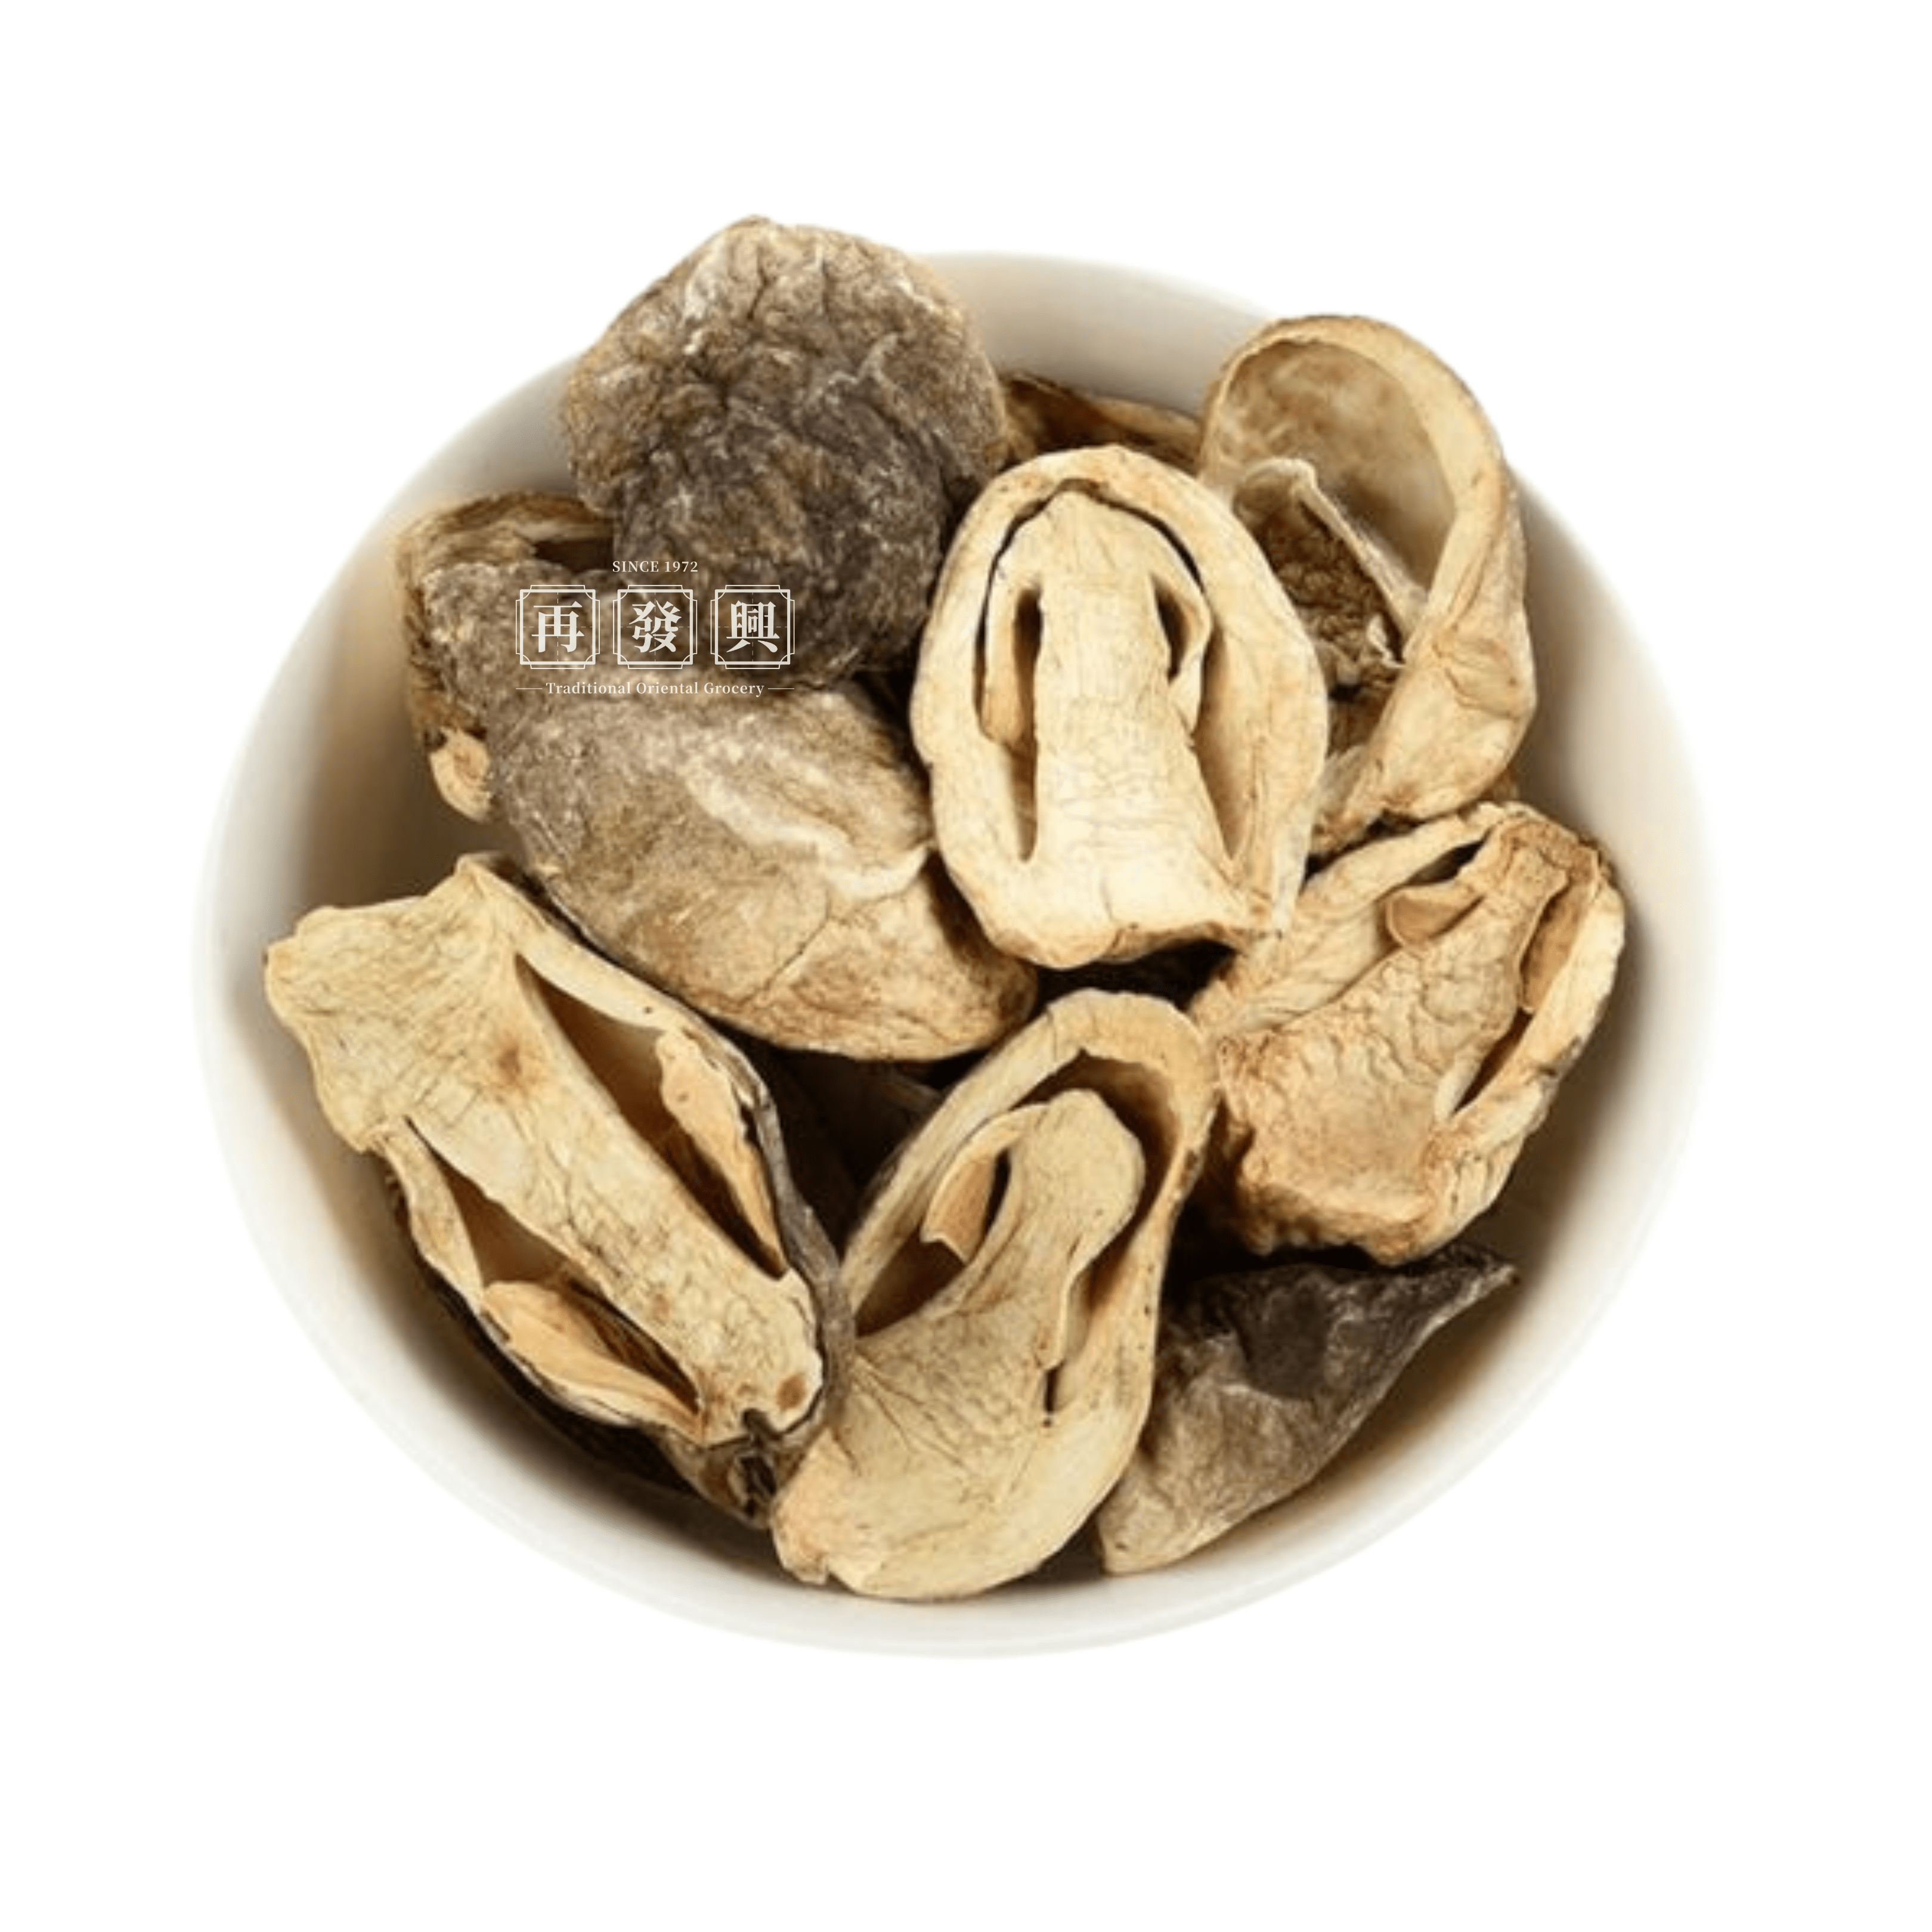 Organic Dried Straw Mushroom - N_m m_ r_m VIETNAM